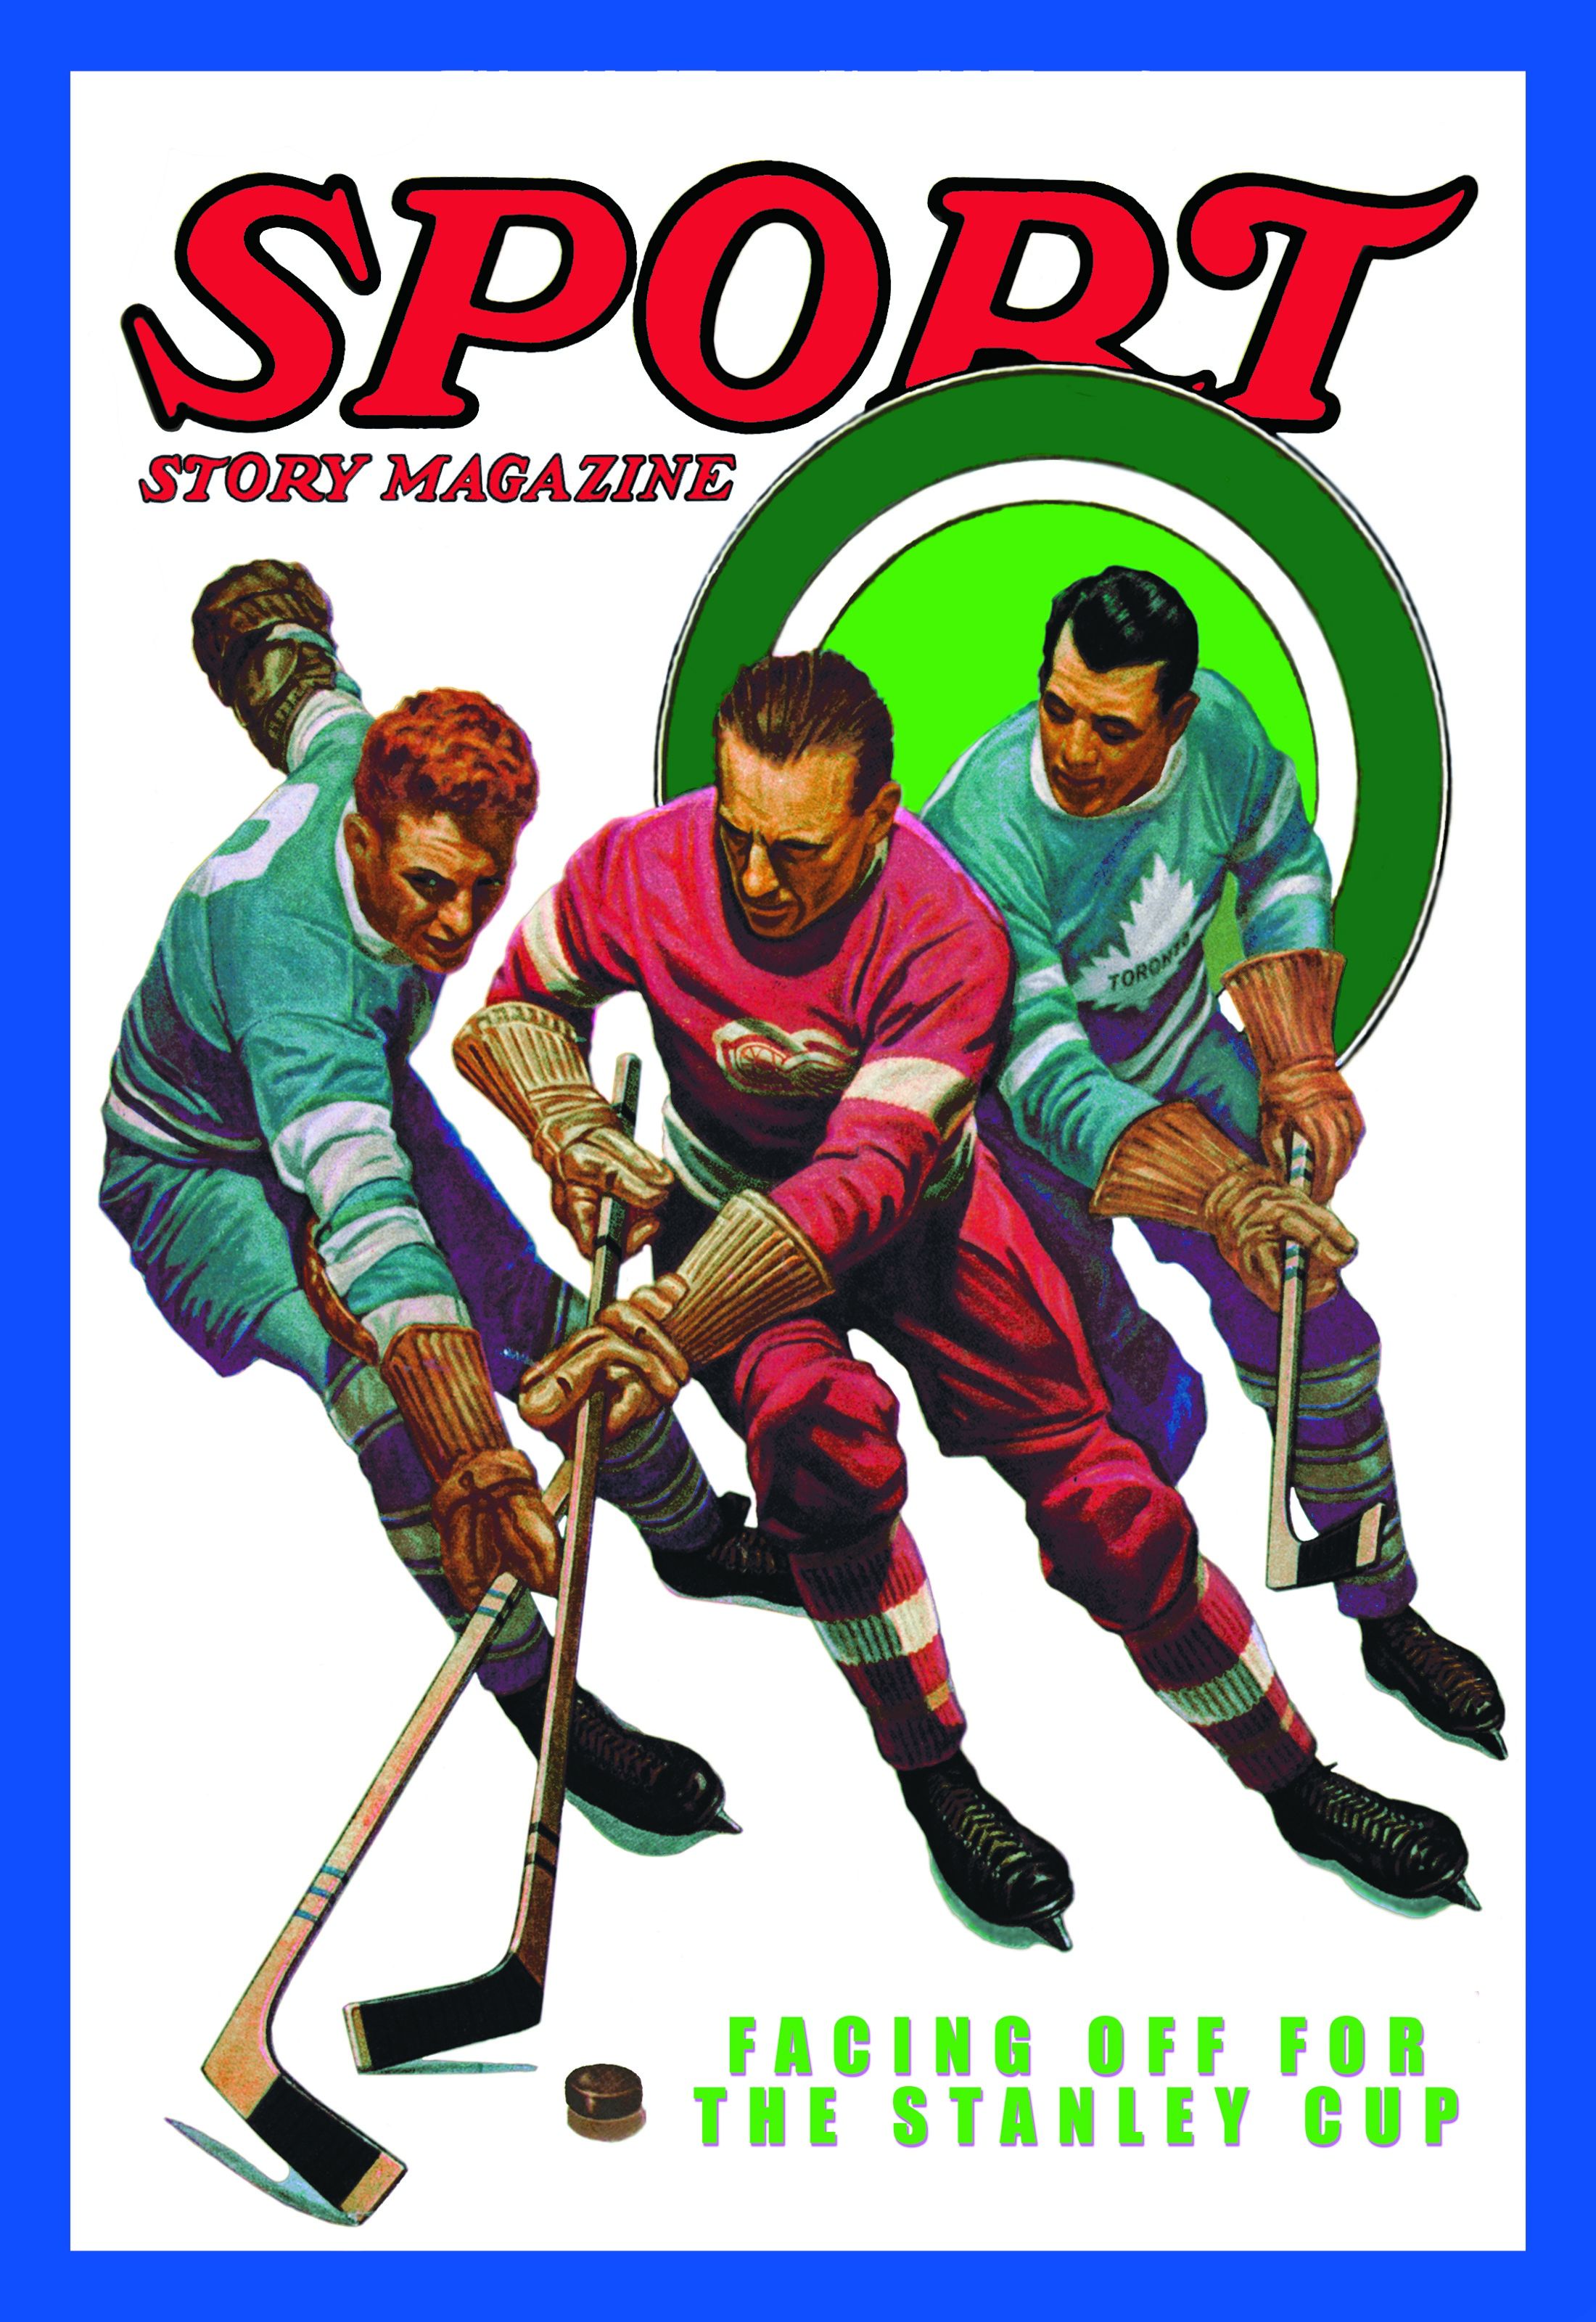 Old hockey magazine